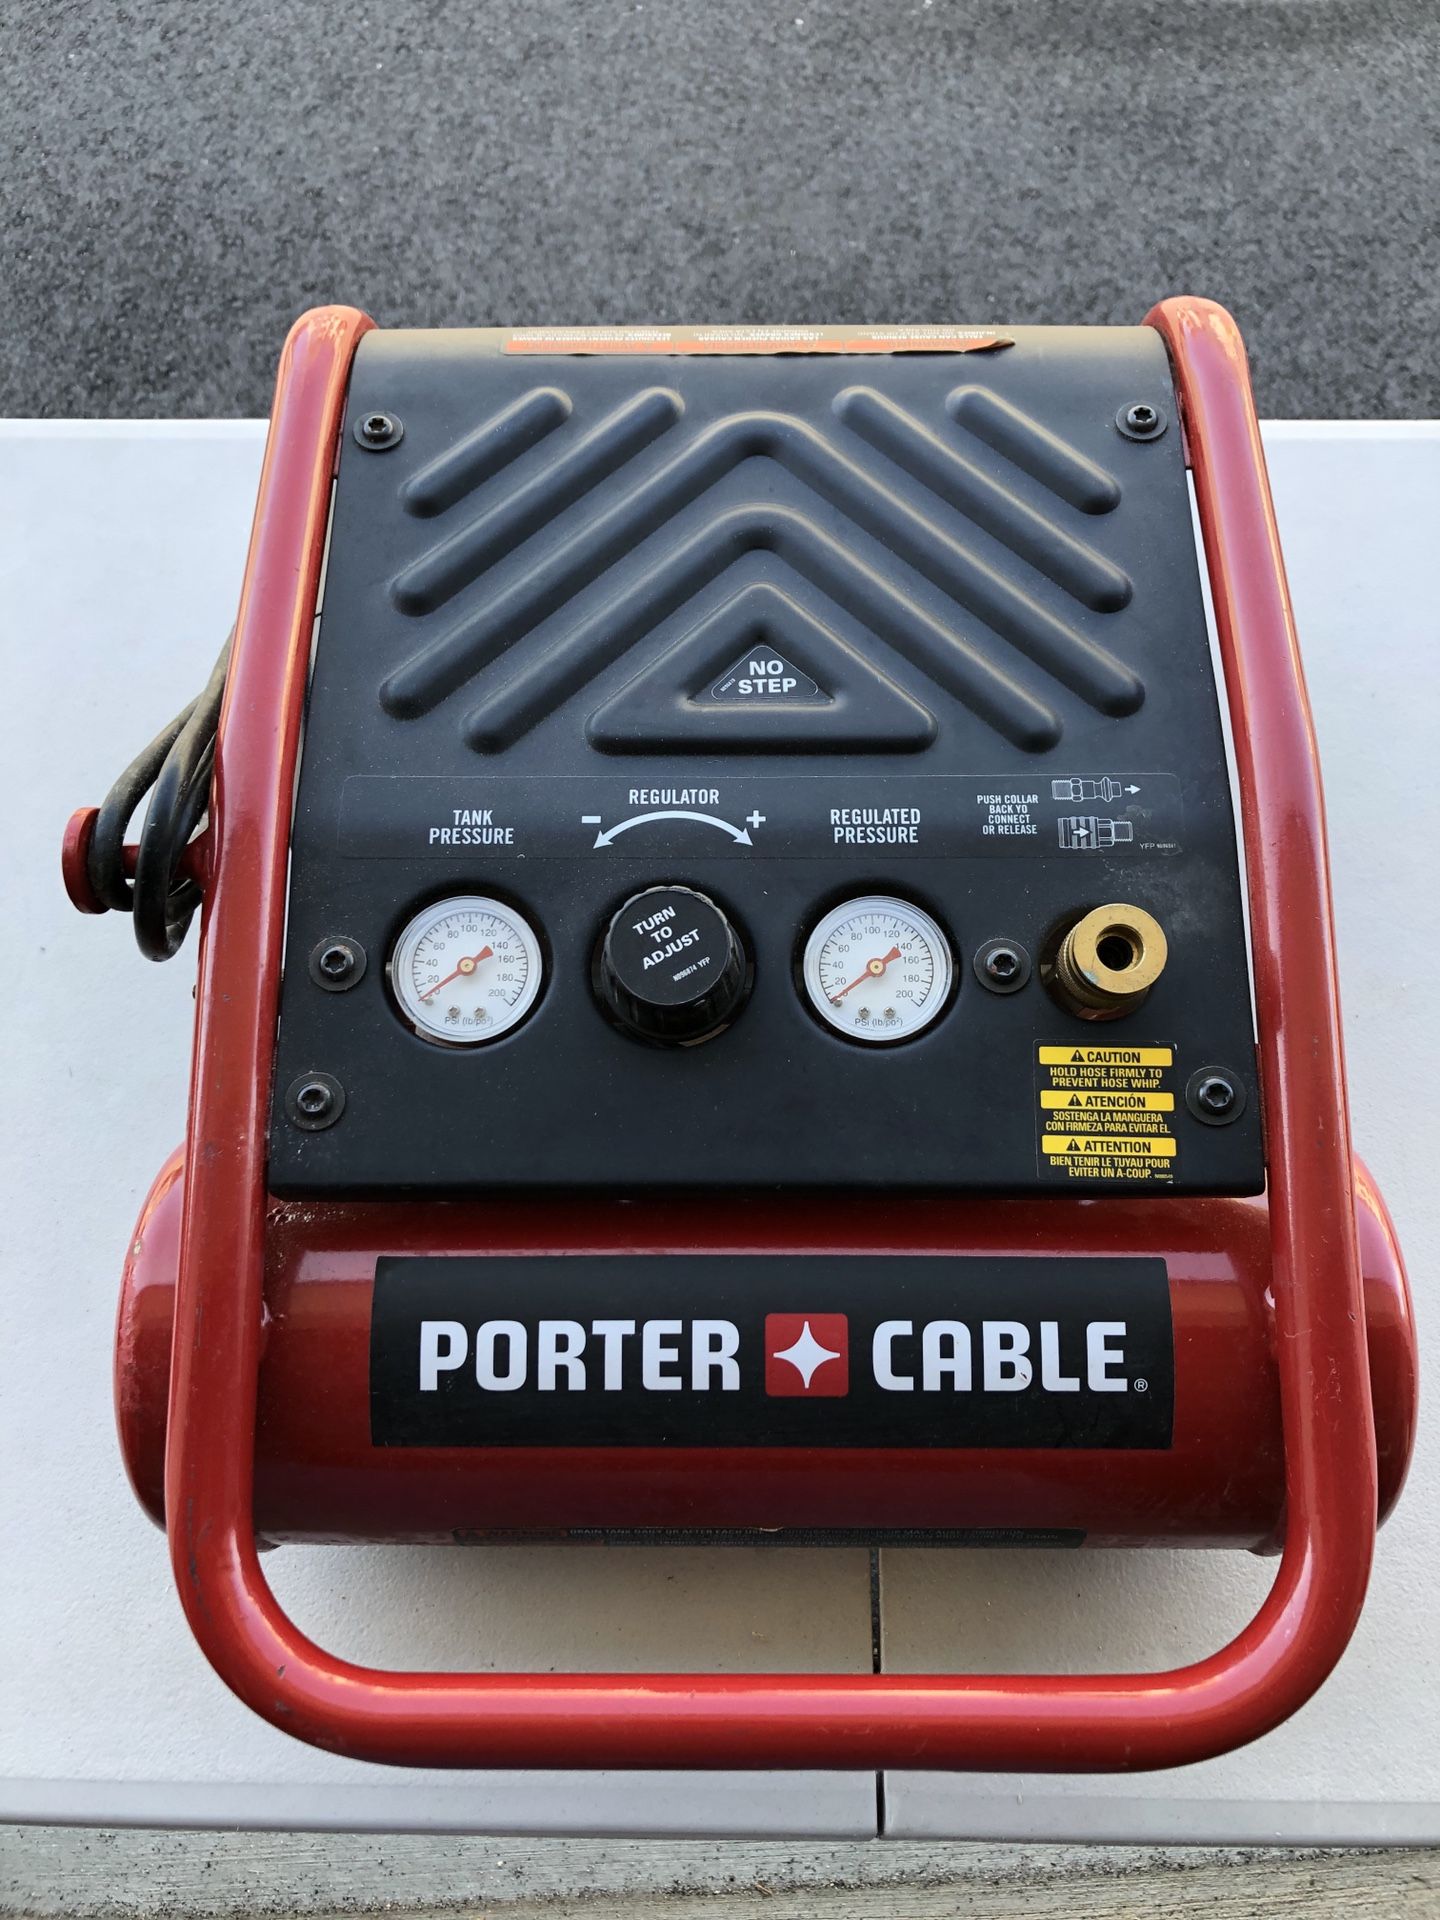 Porter Cable 1gal Air Compressor